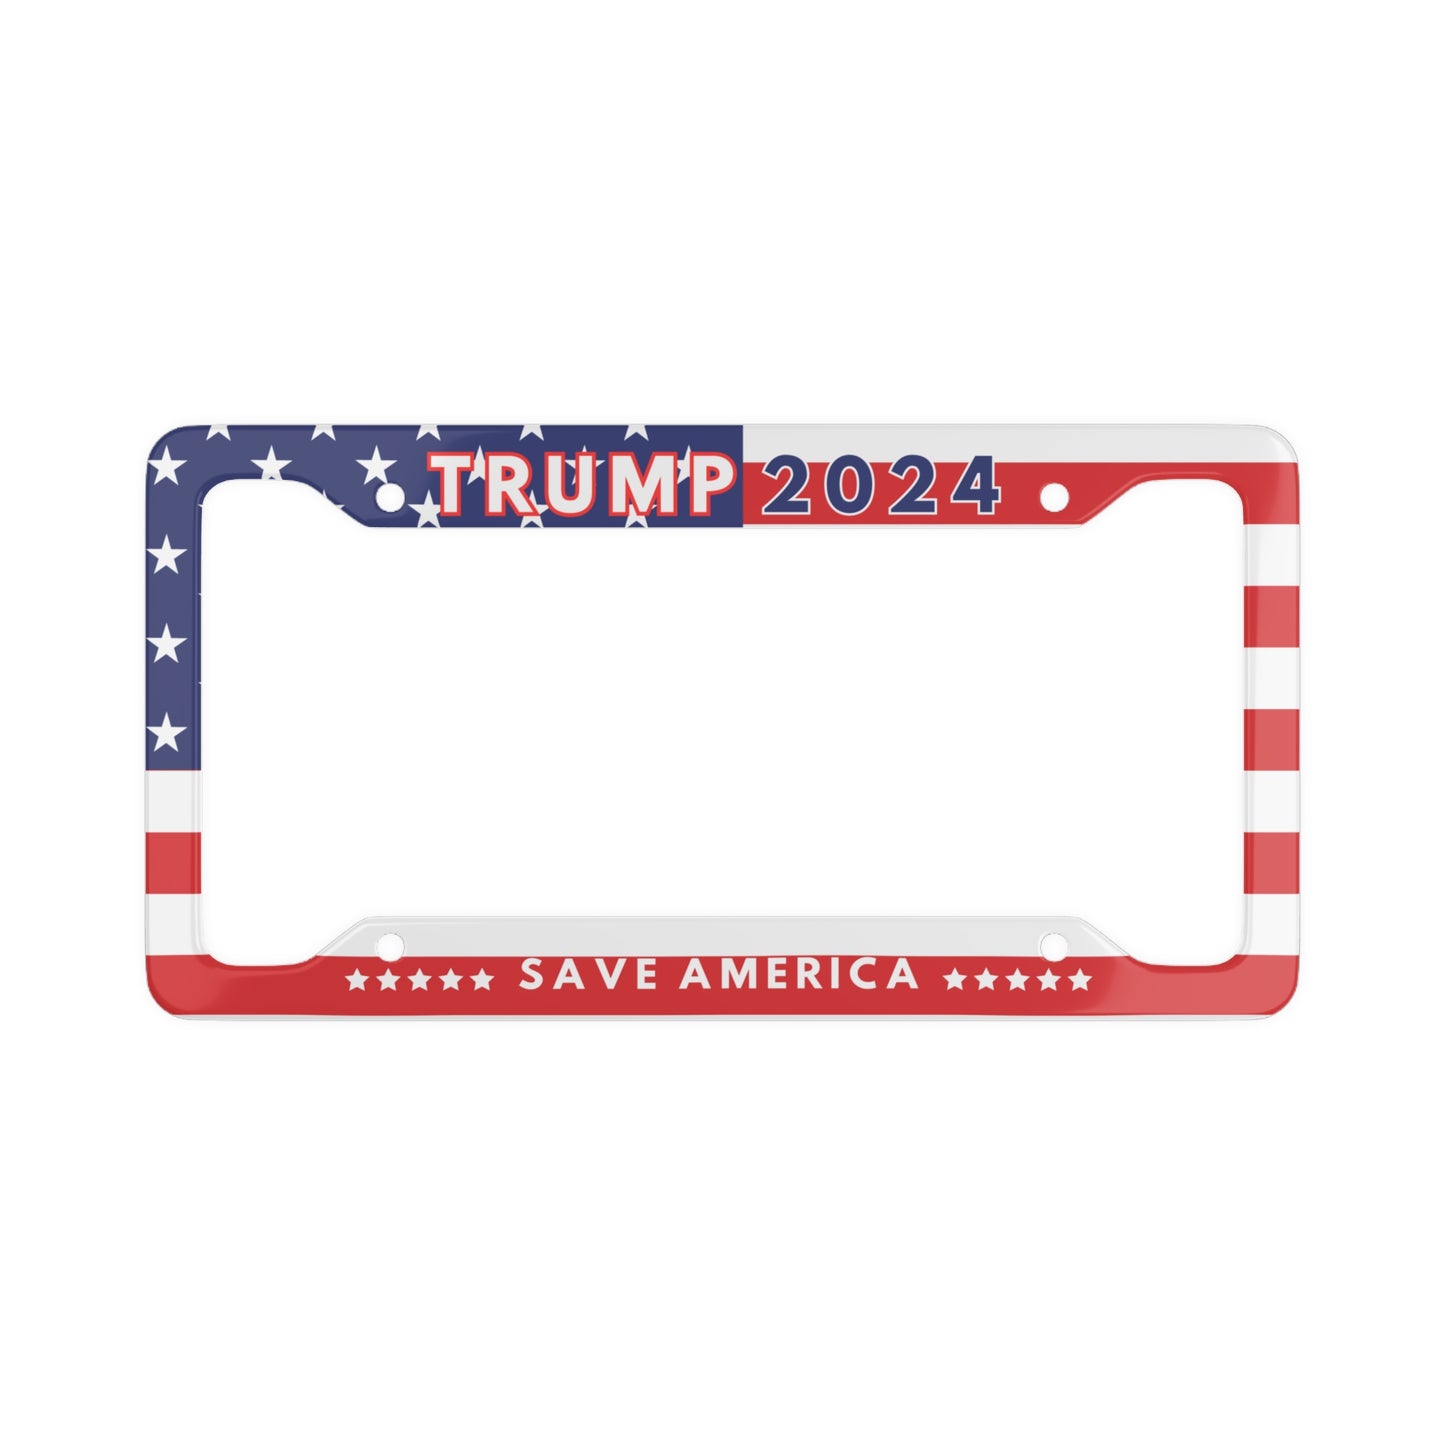 Trump 2024 License Plate Frame